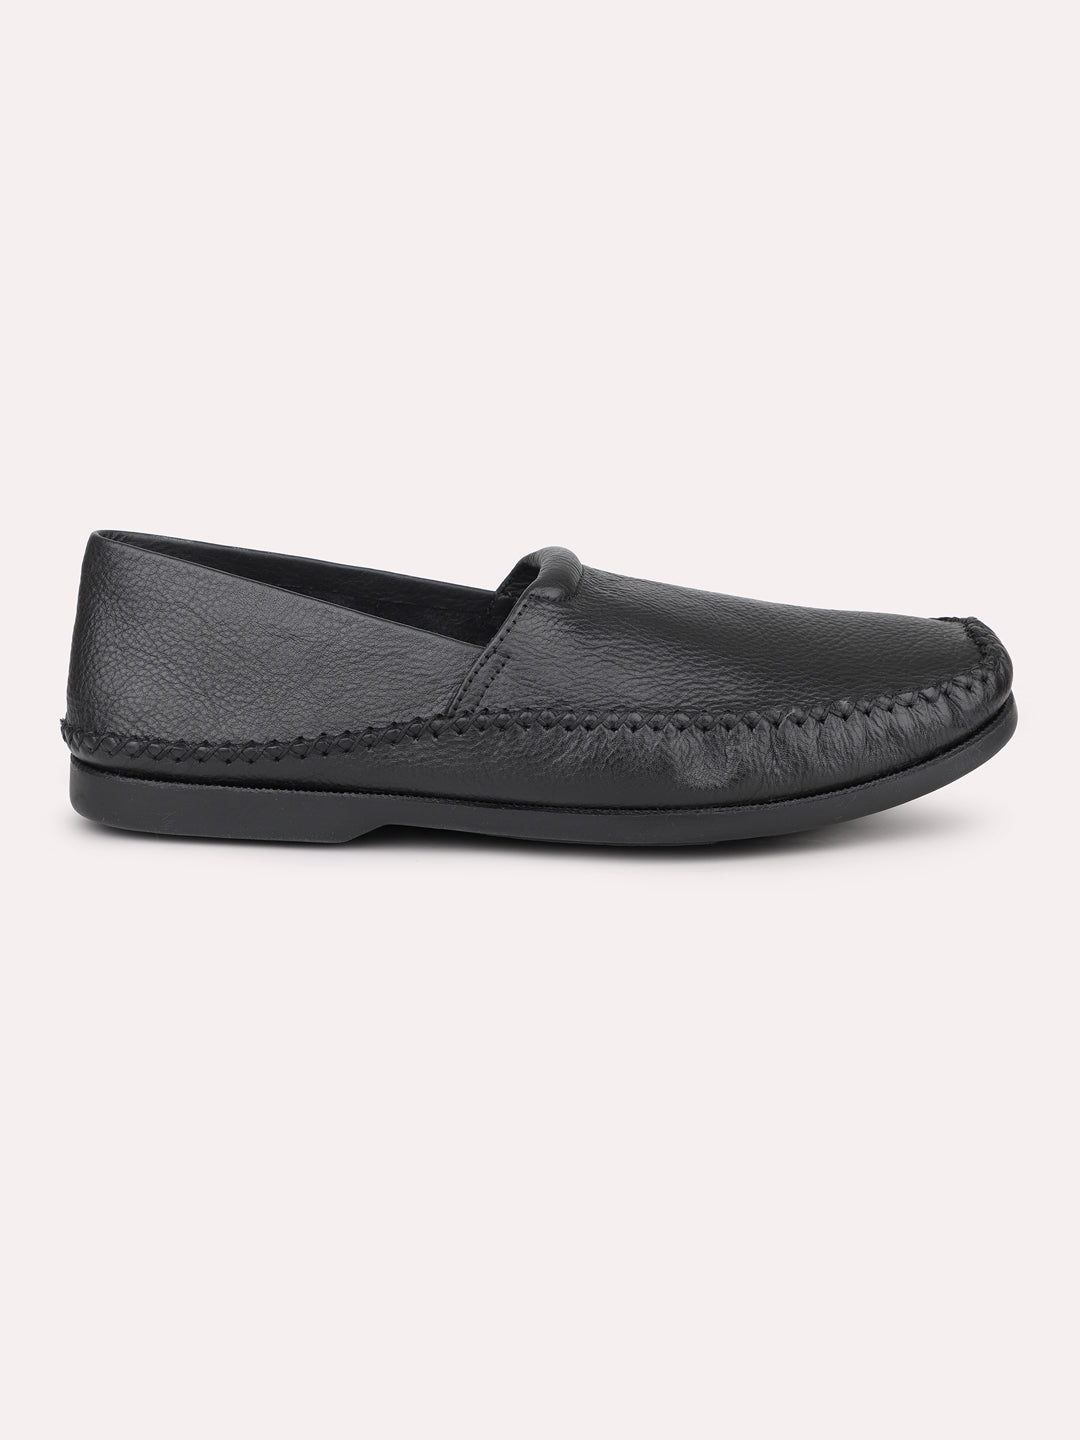 Atesber Black Solid Casual Slip-on Shoes For Men